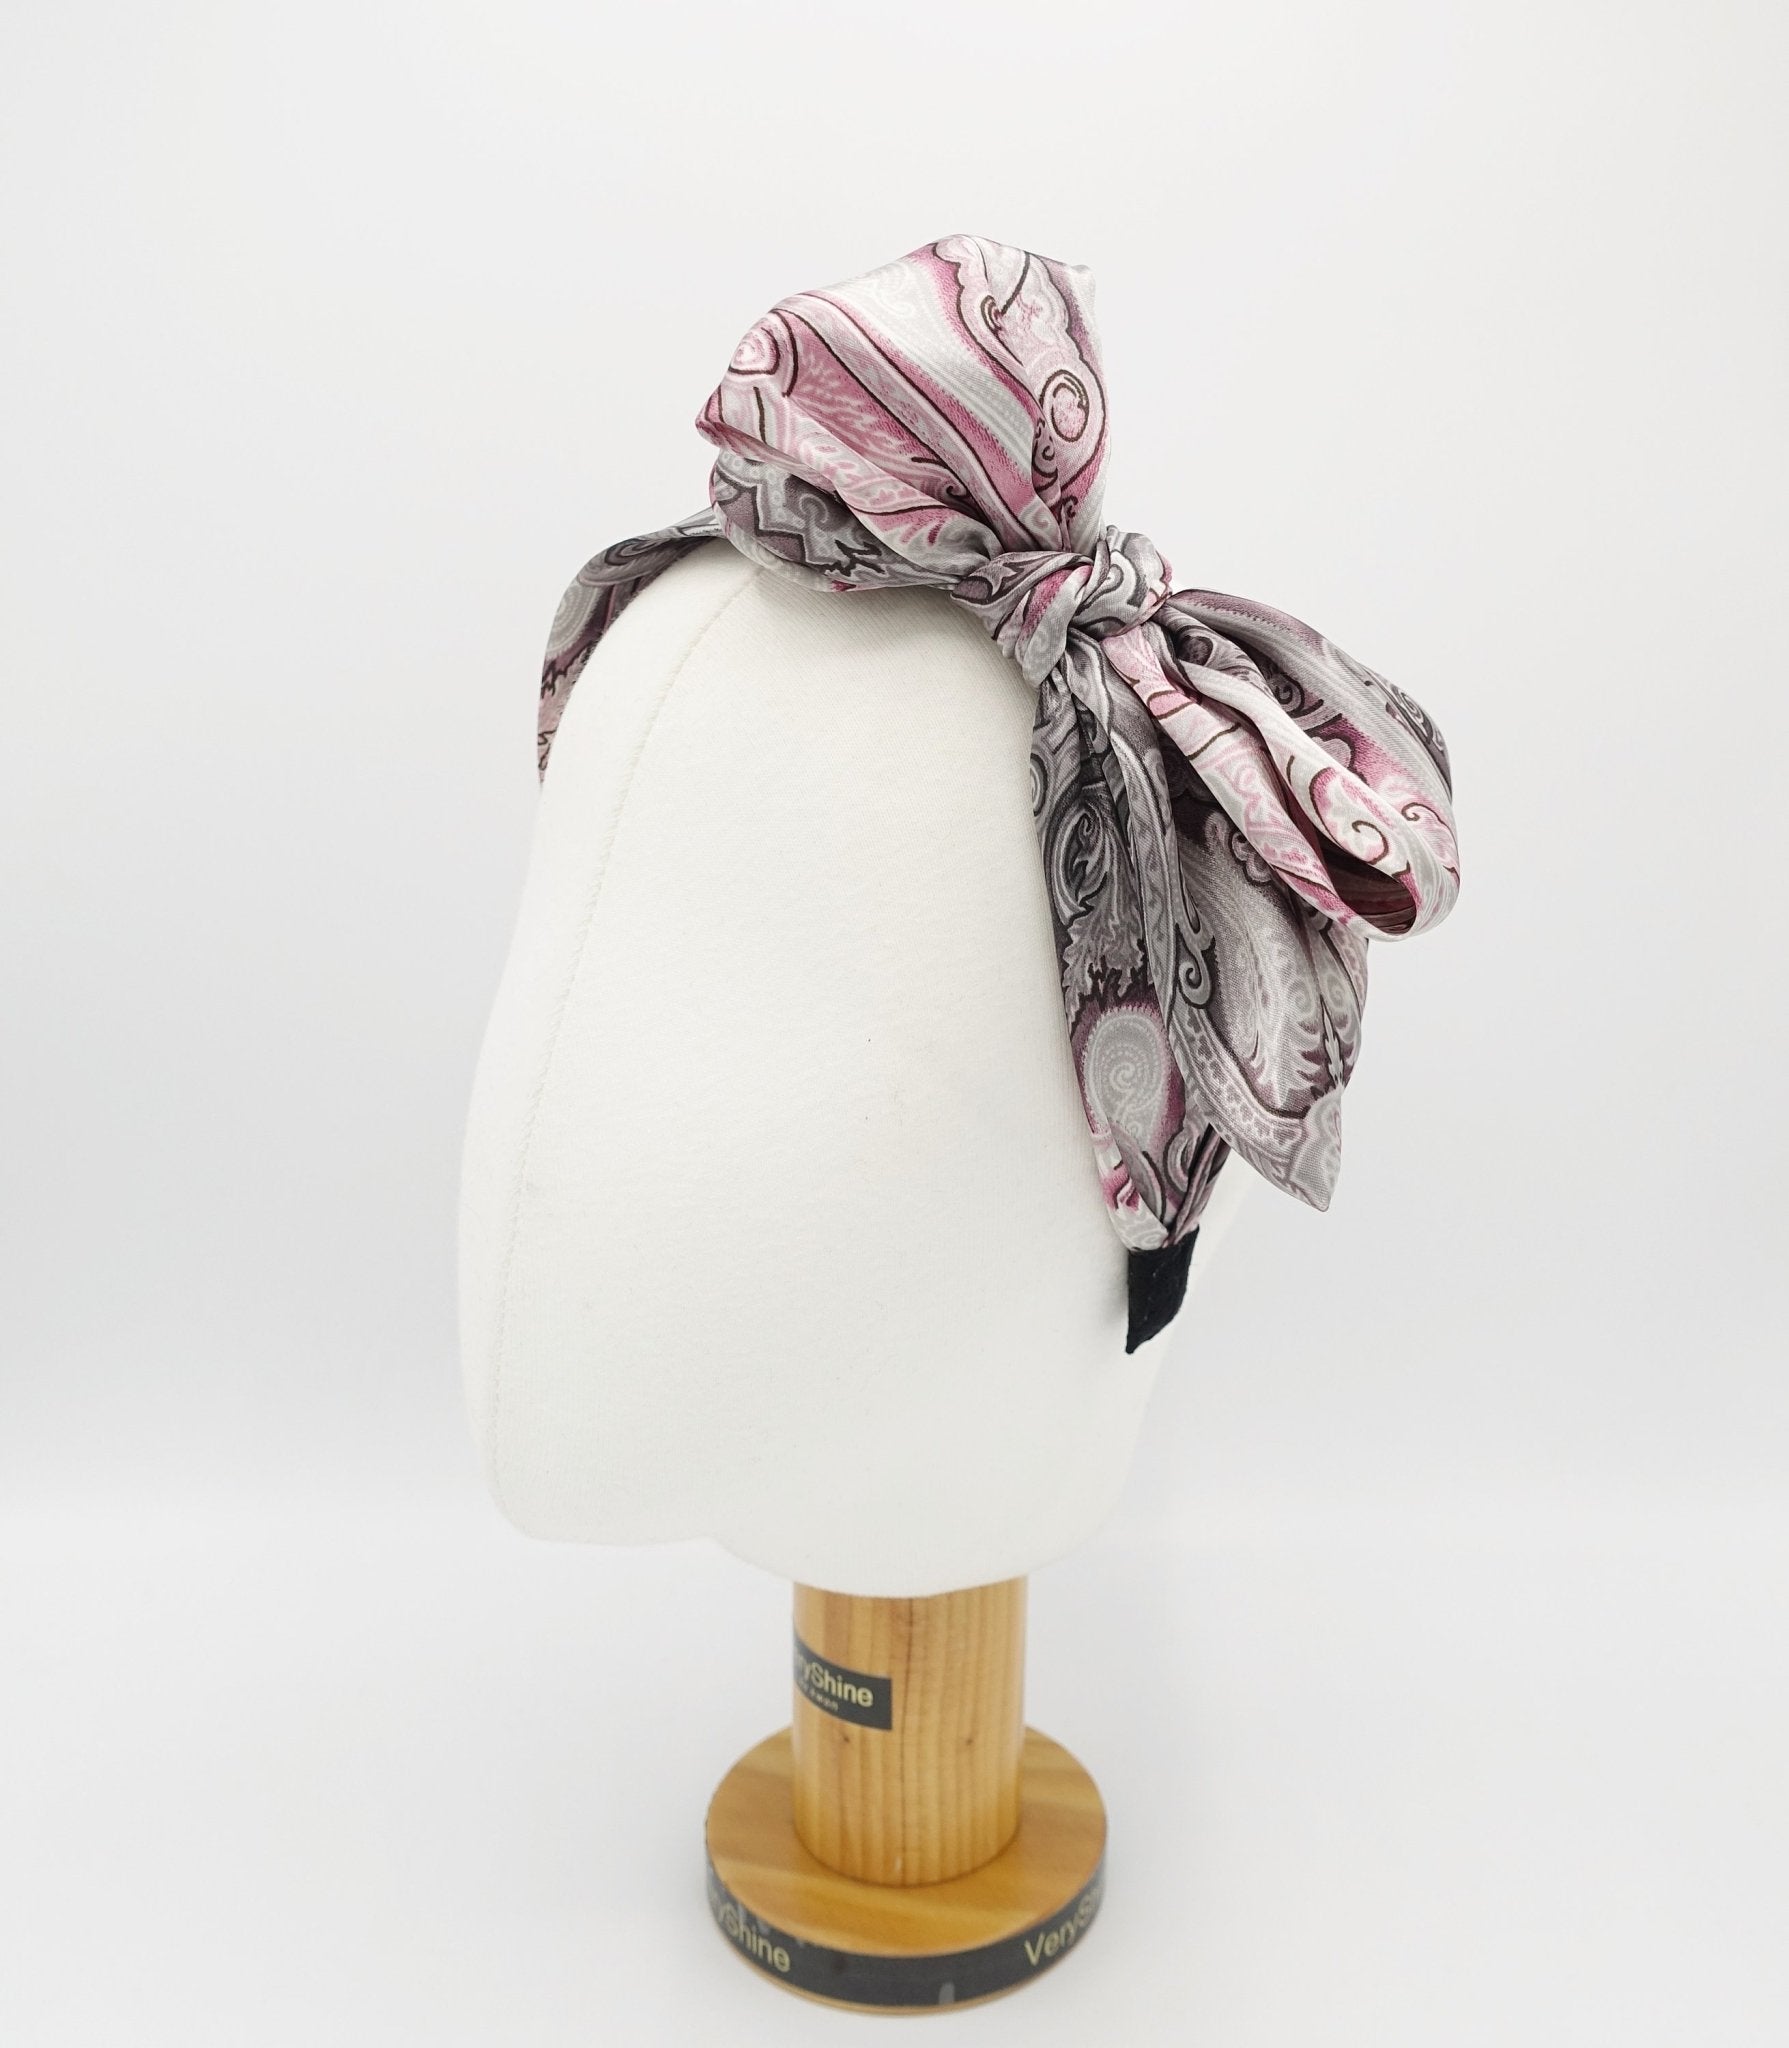 VeryShine Headband silk satin bow knot headband paisley print hairband luxury hair accessory for women